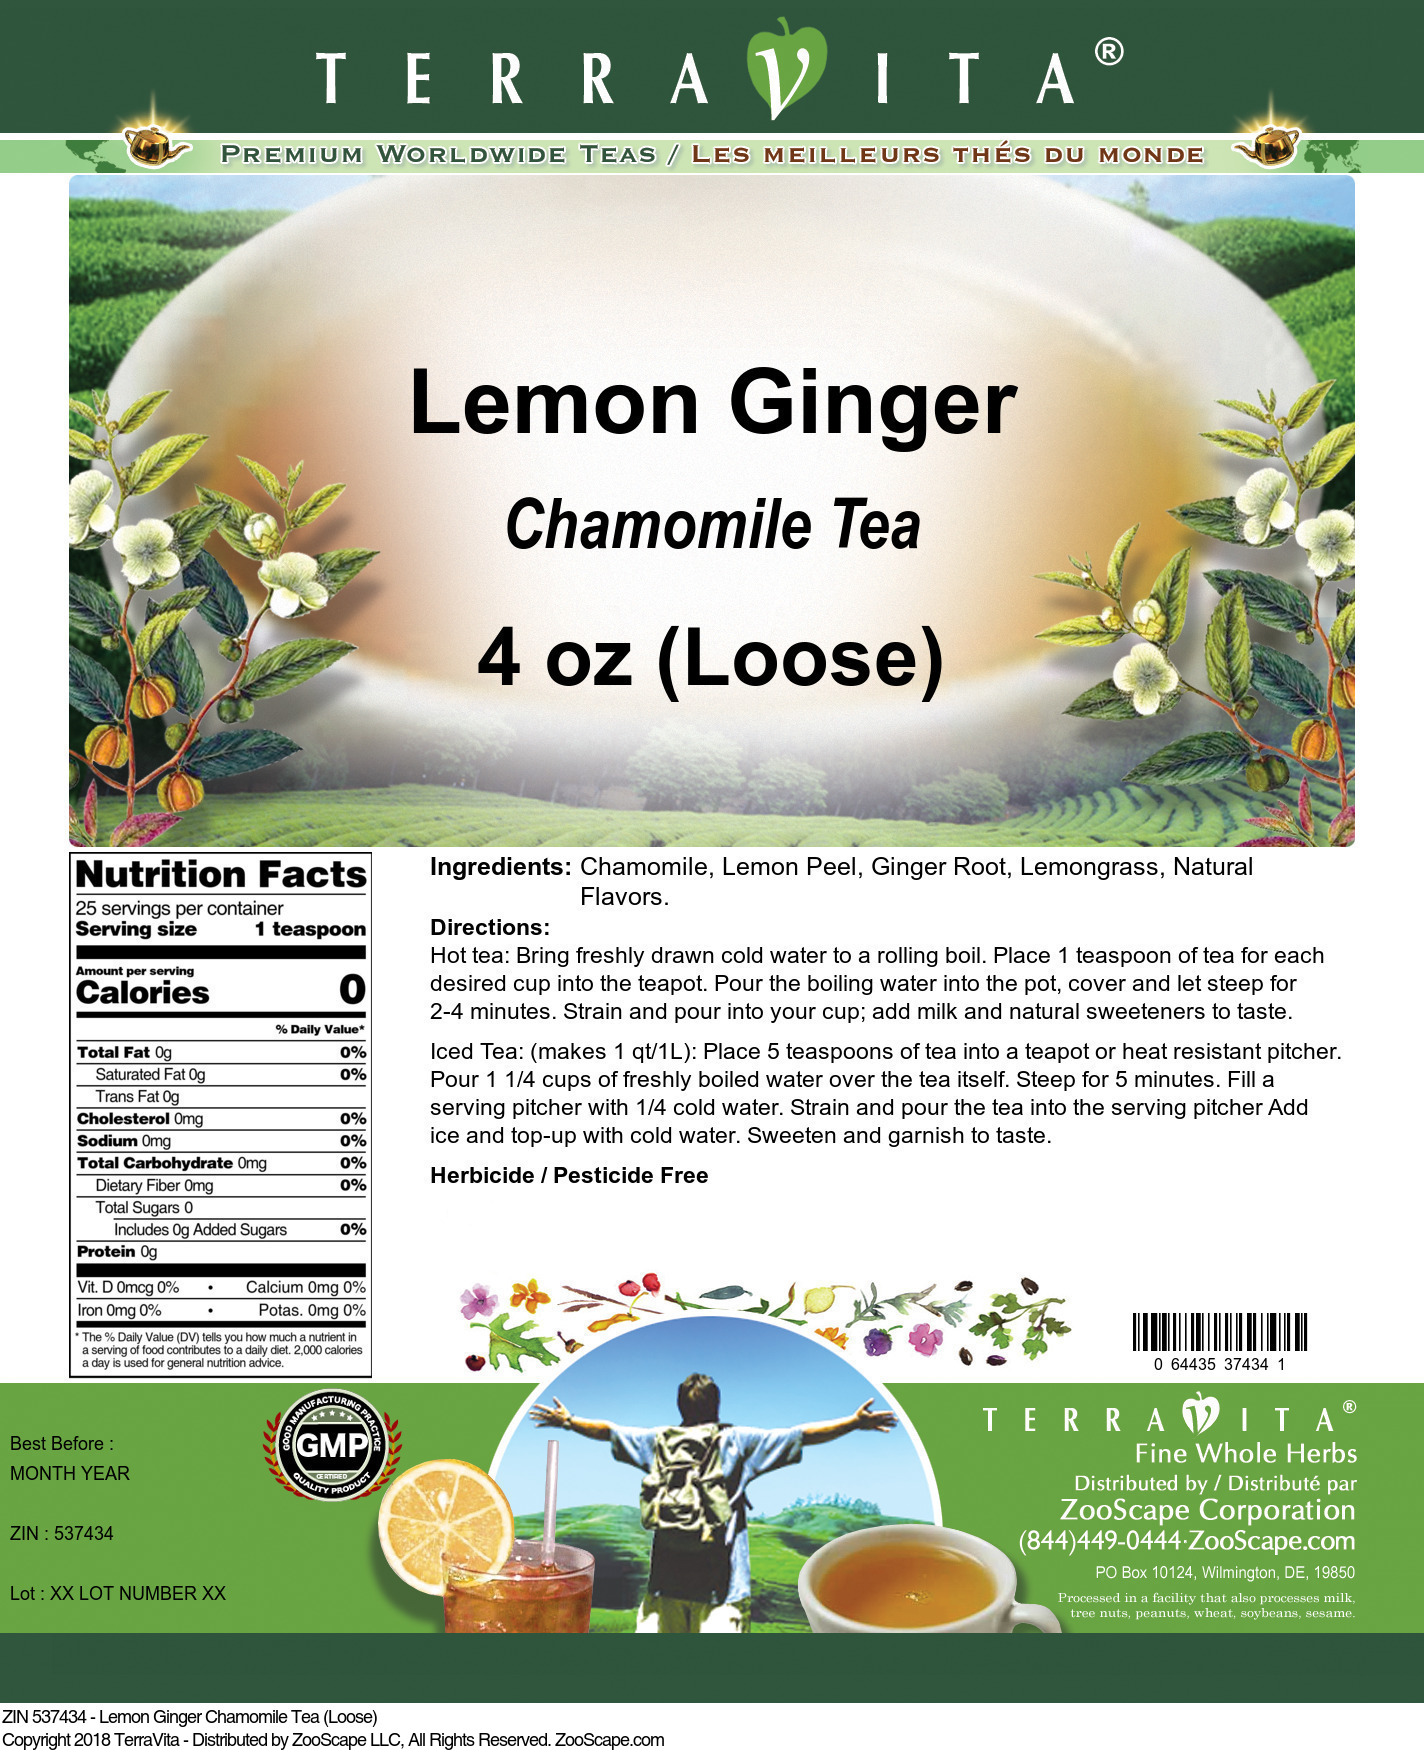 Lemon Ginger Chamomile Tea (Loose) - Label